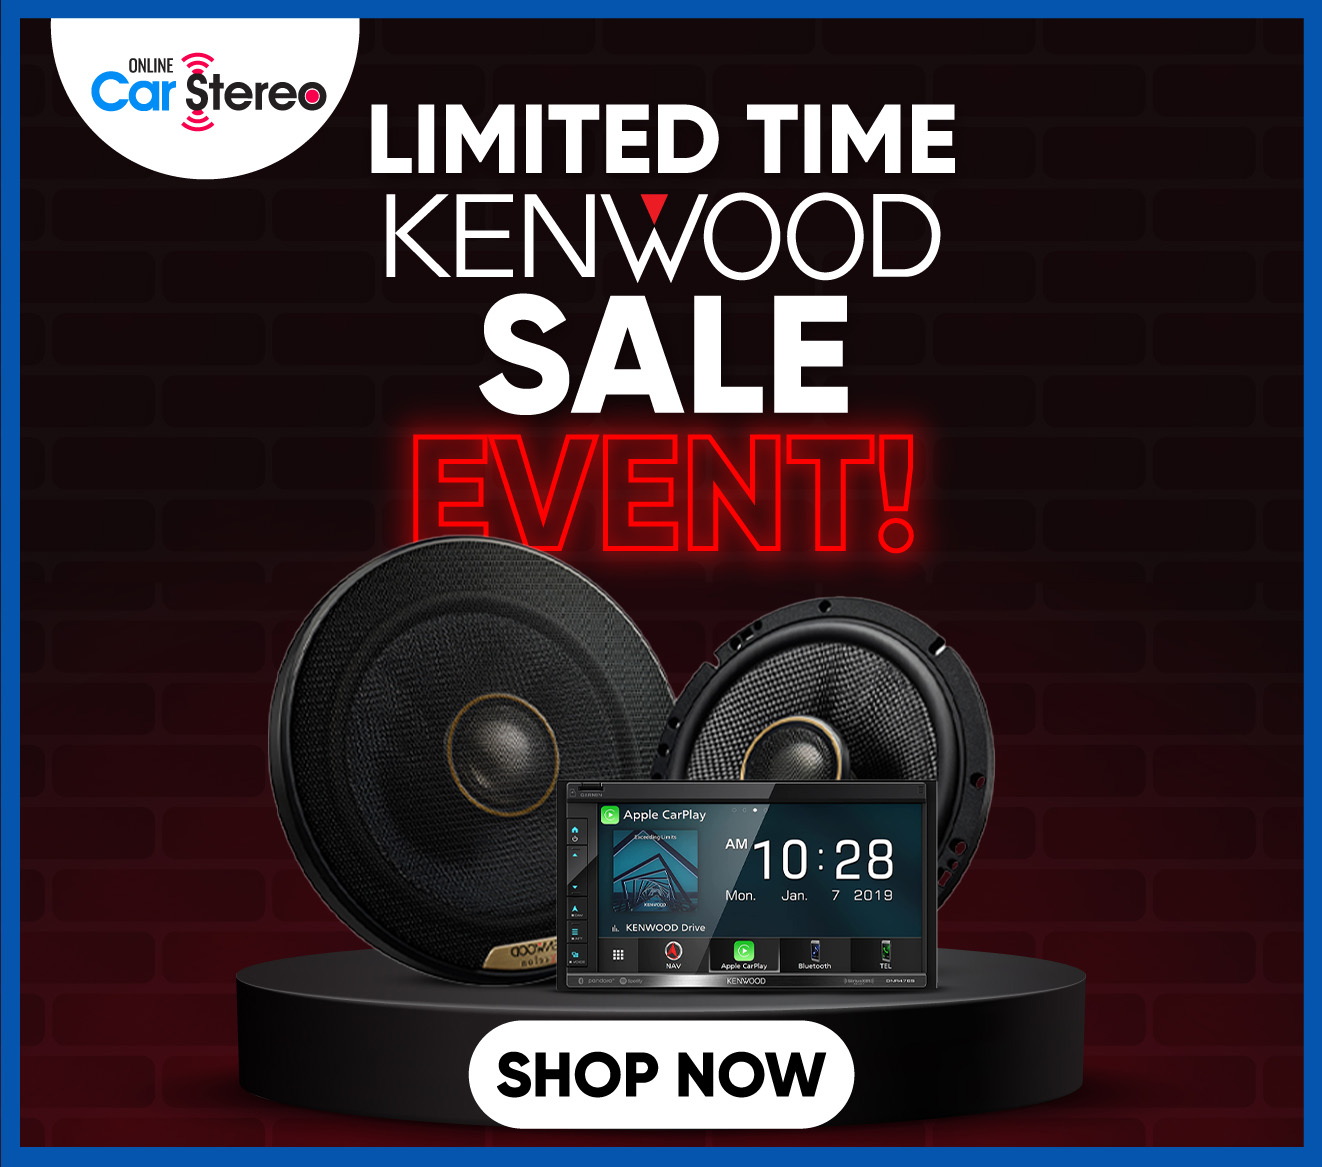 Kenwood Sale Event